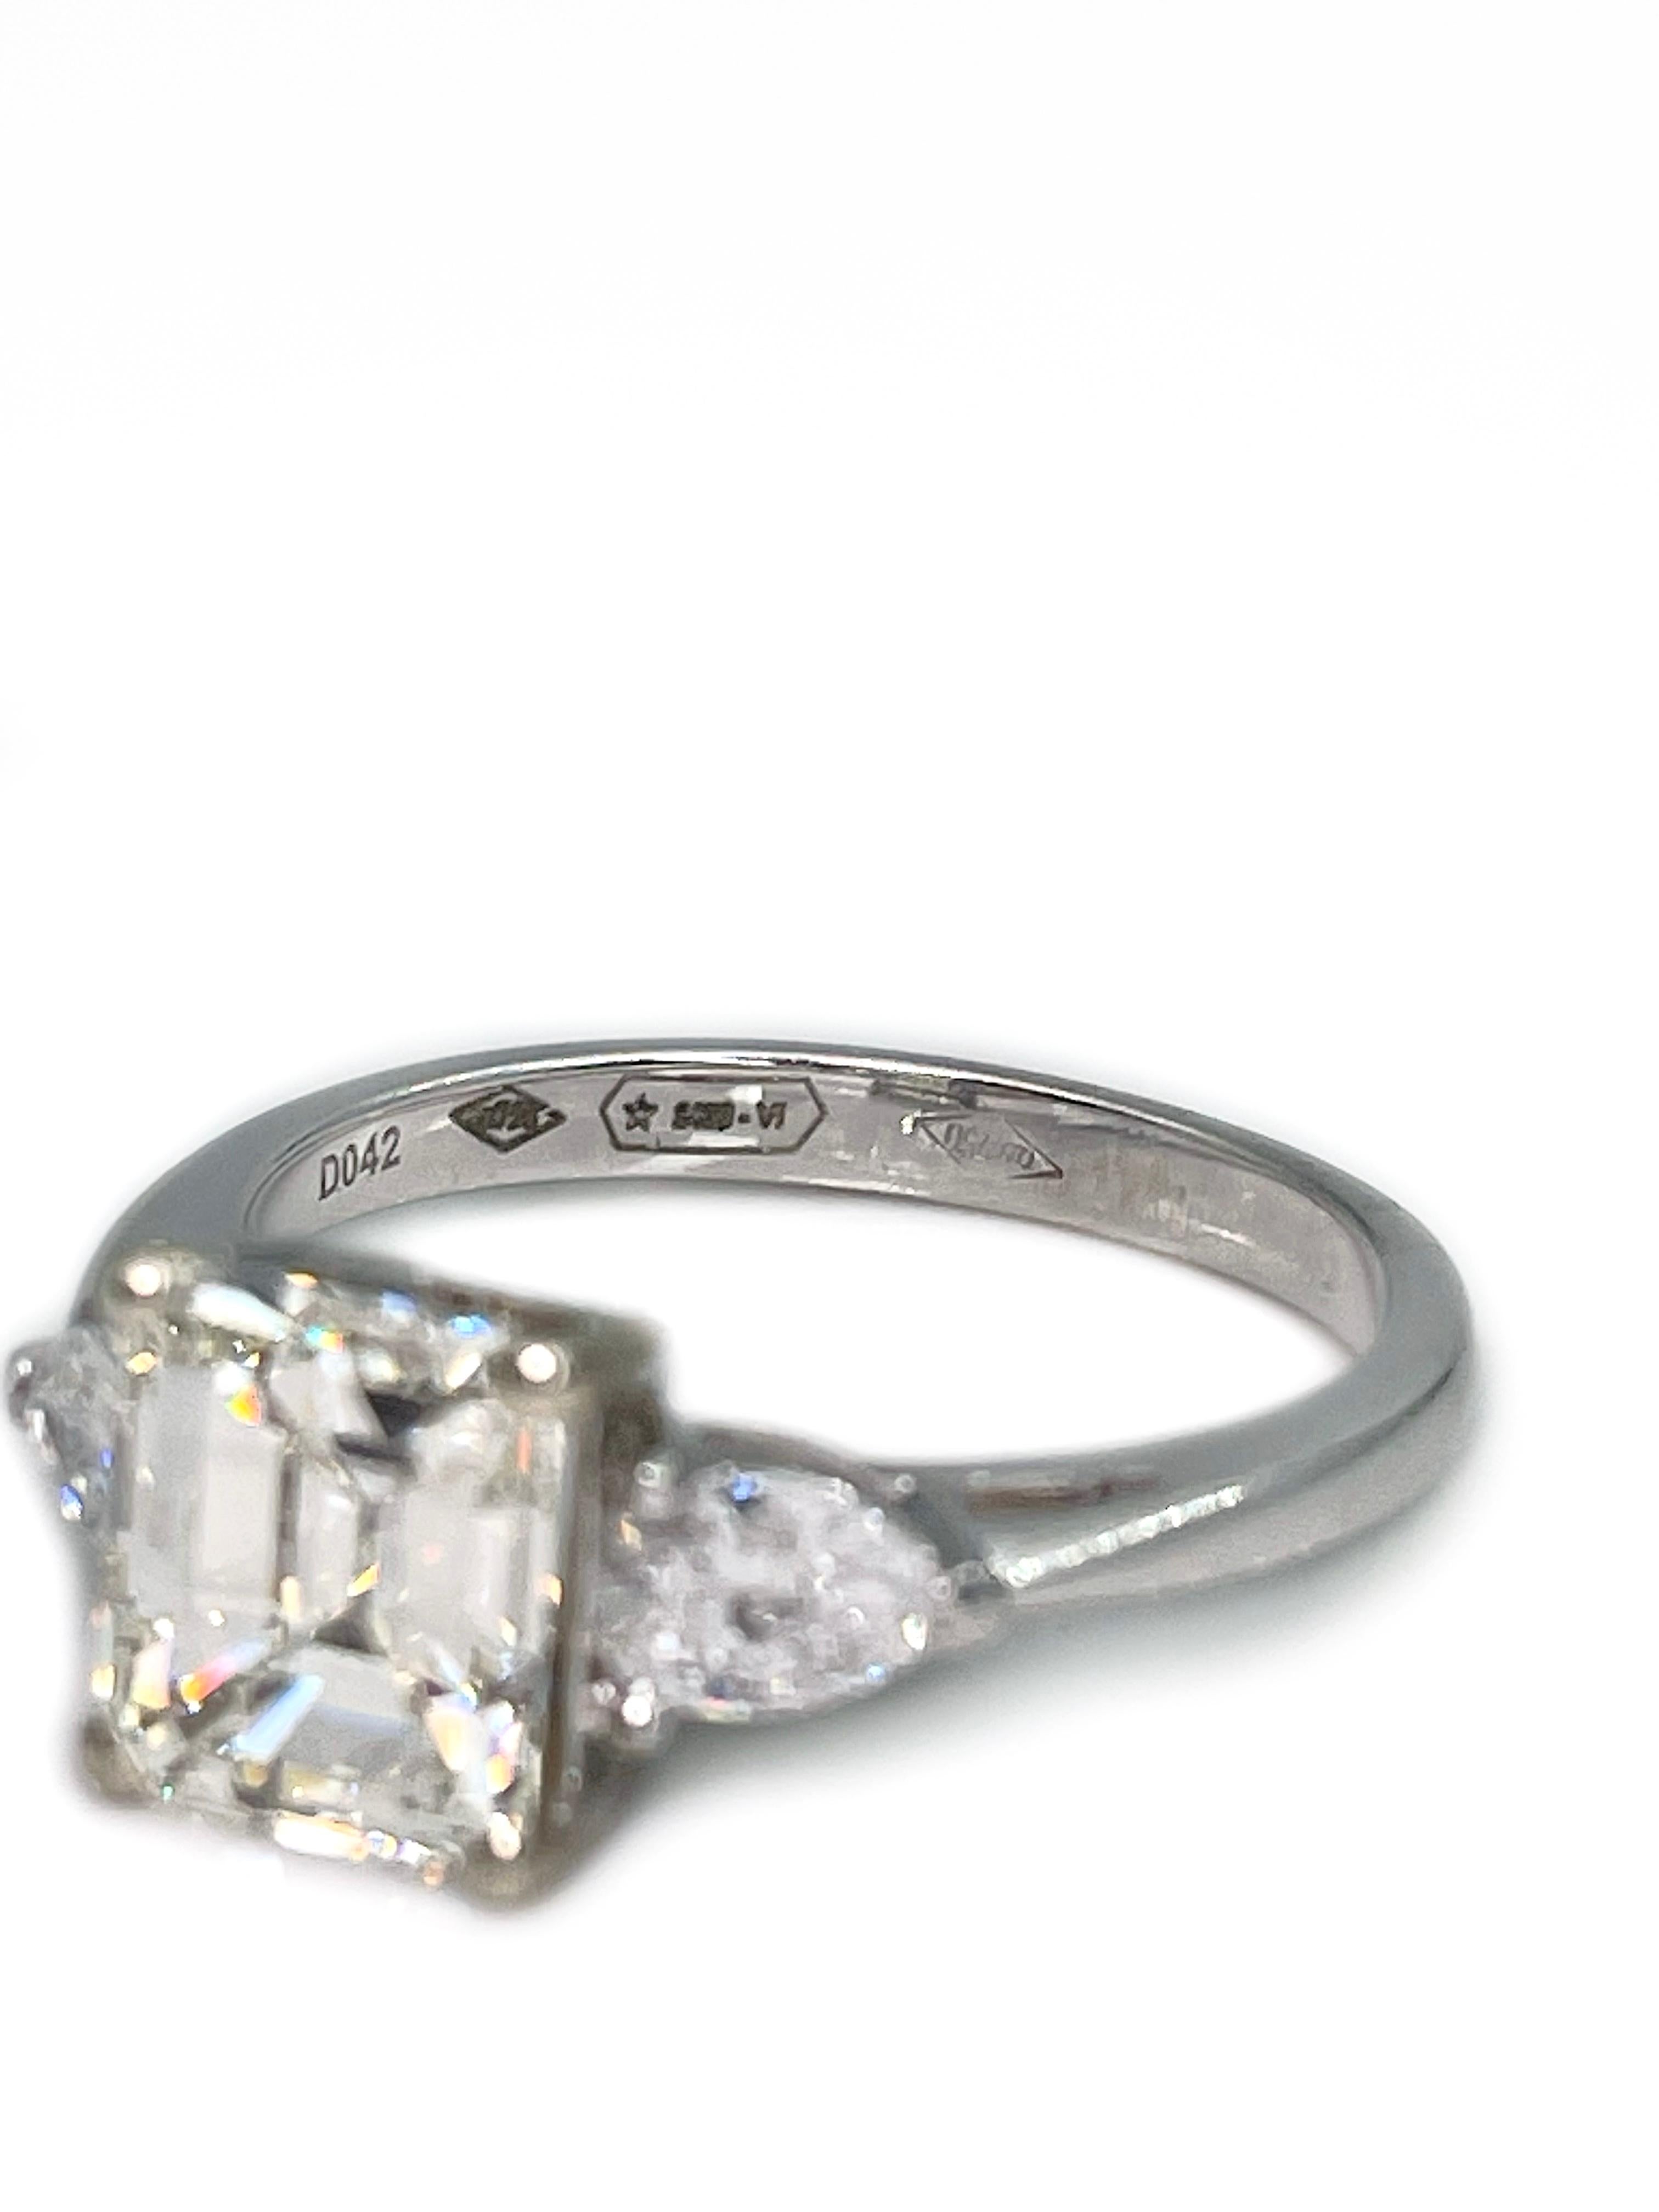 Certified 18 Karat Gold 2.03 Carat Diamond Emerald Cut VVS2 Engagement Ring 1